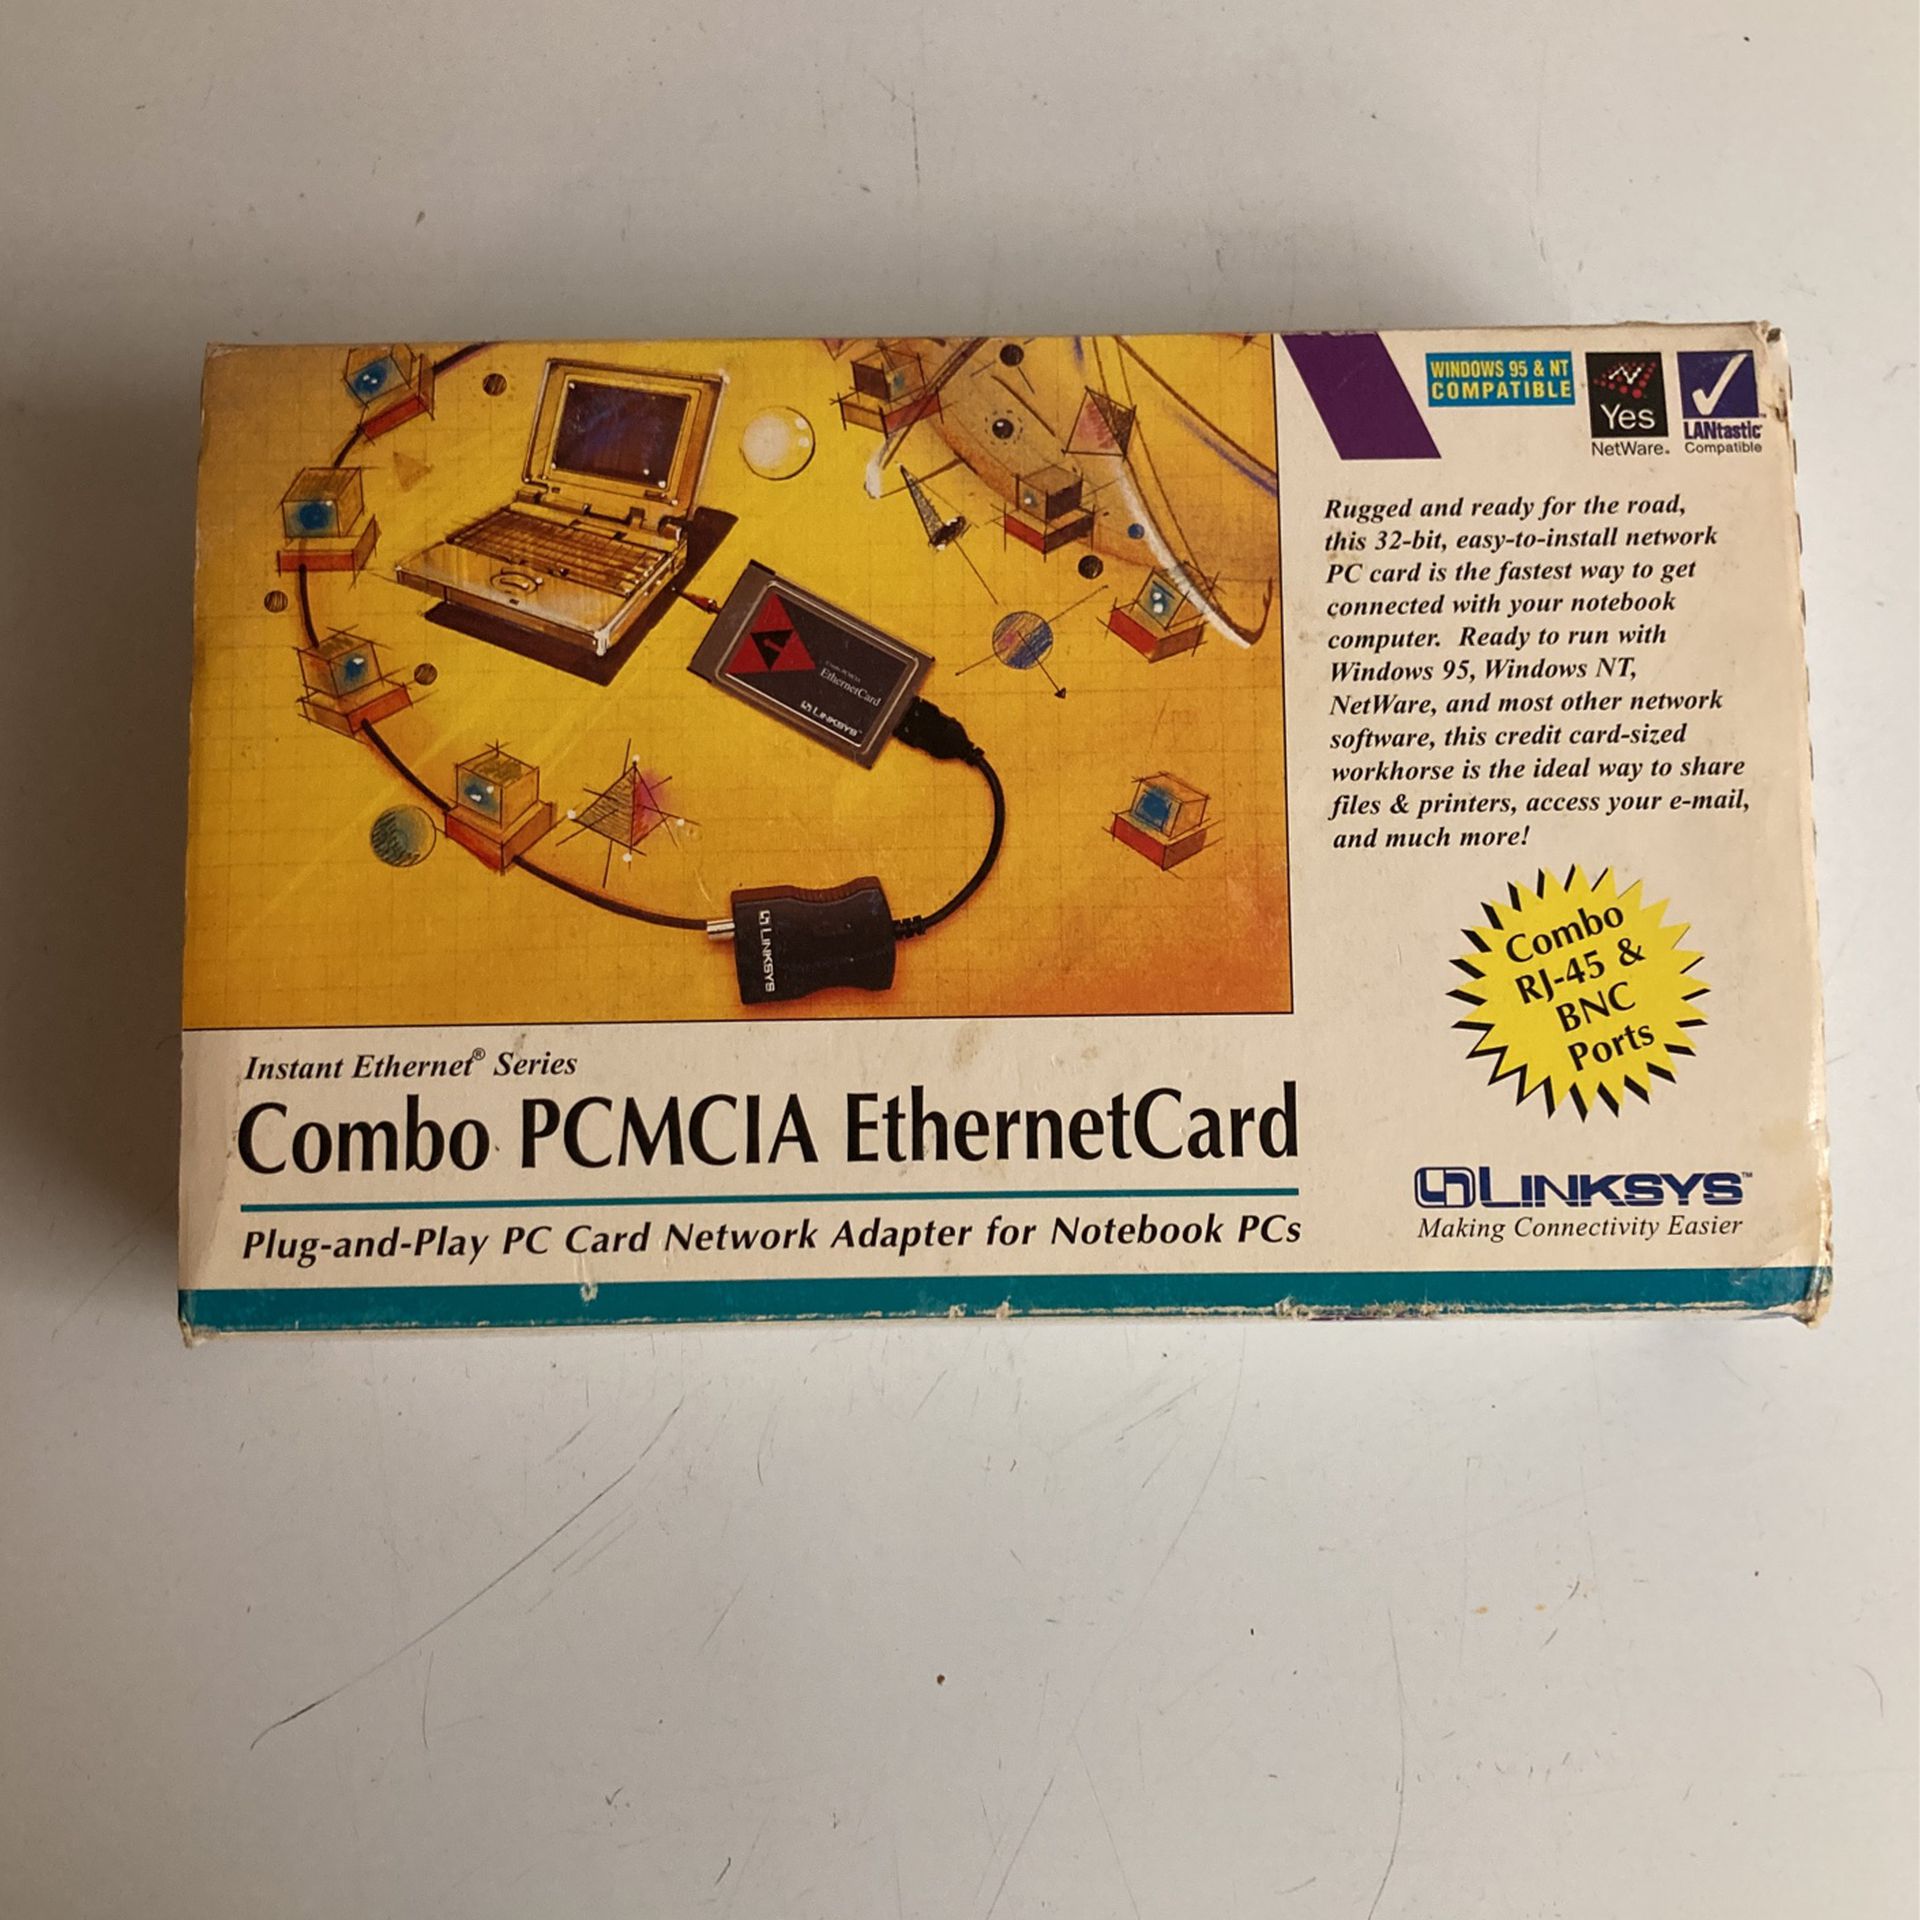 ComboPCMCIA Ethernet Card